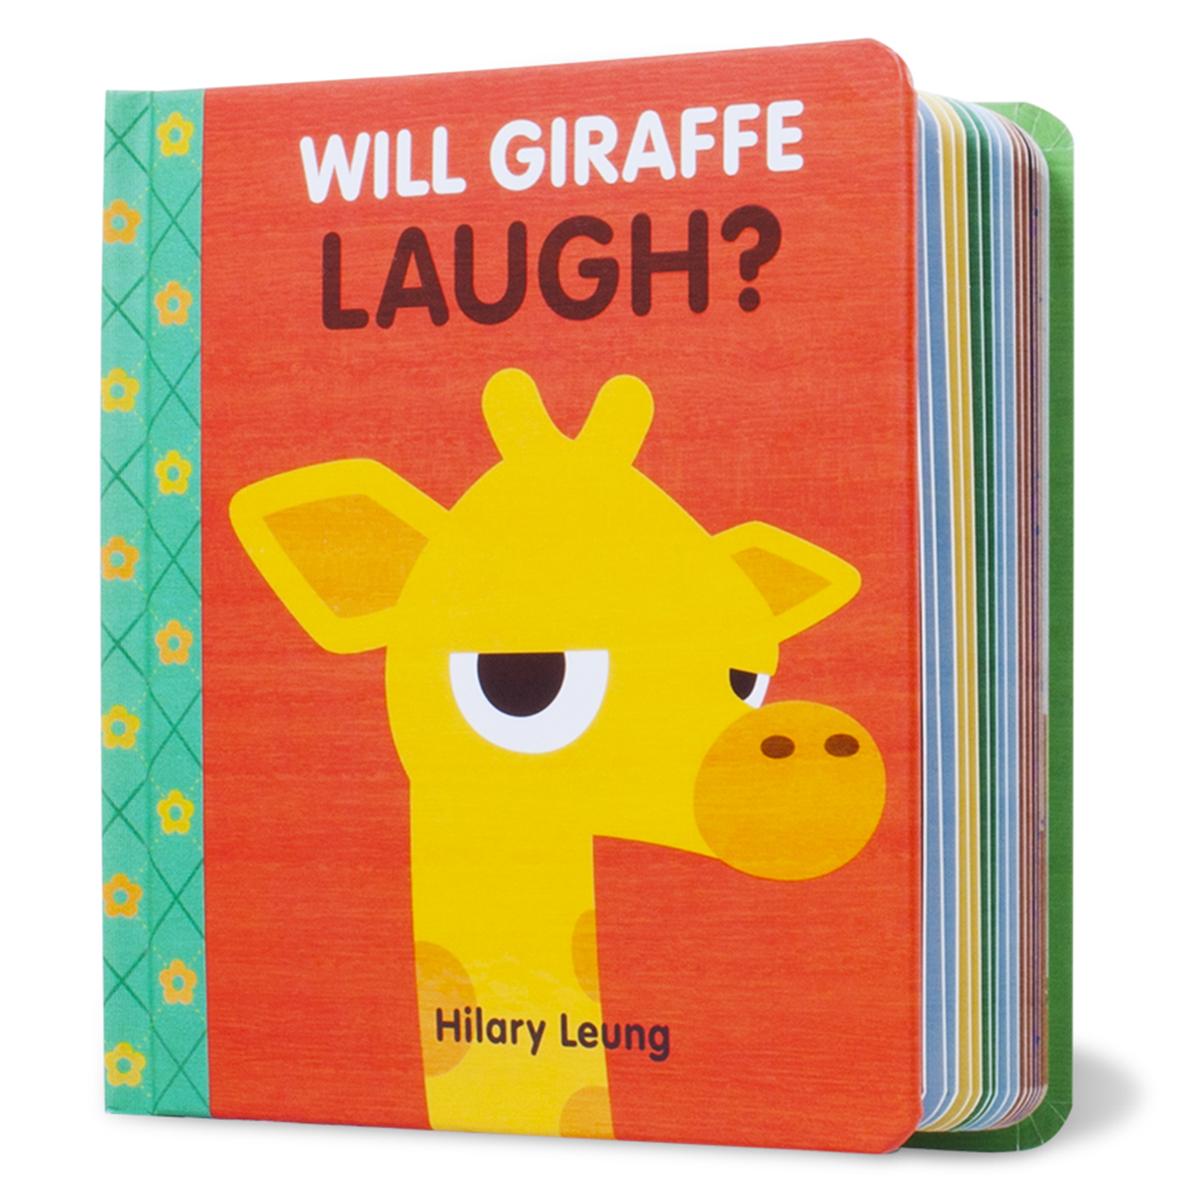  Will Giraffe Laugh? 